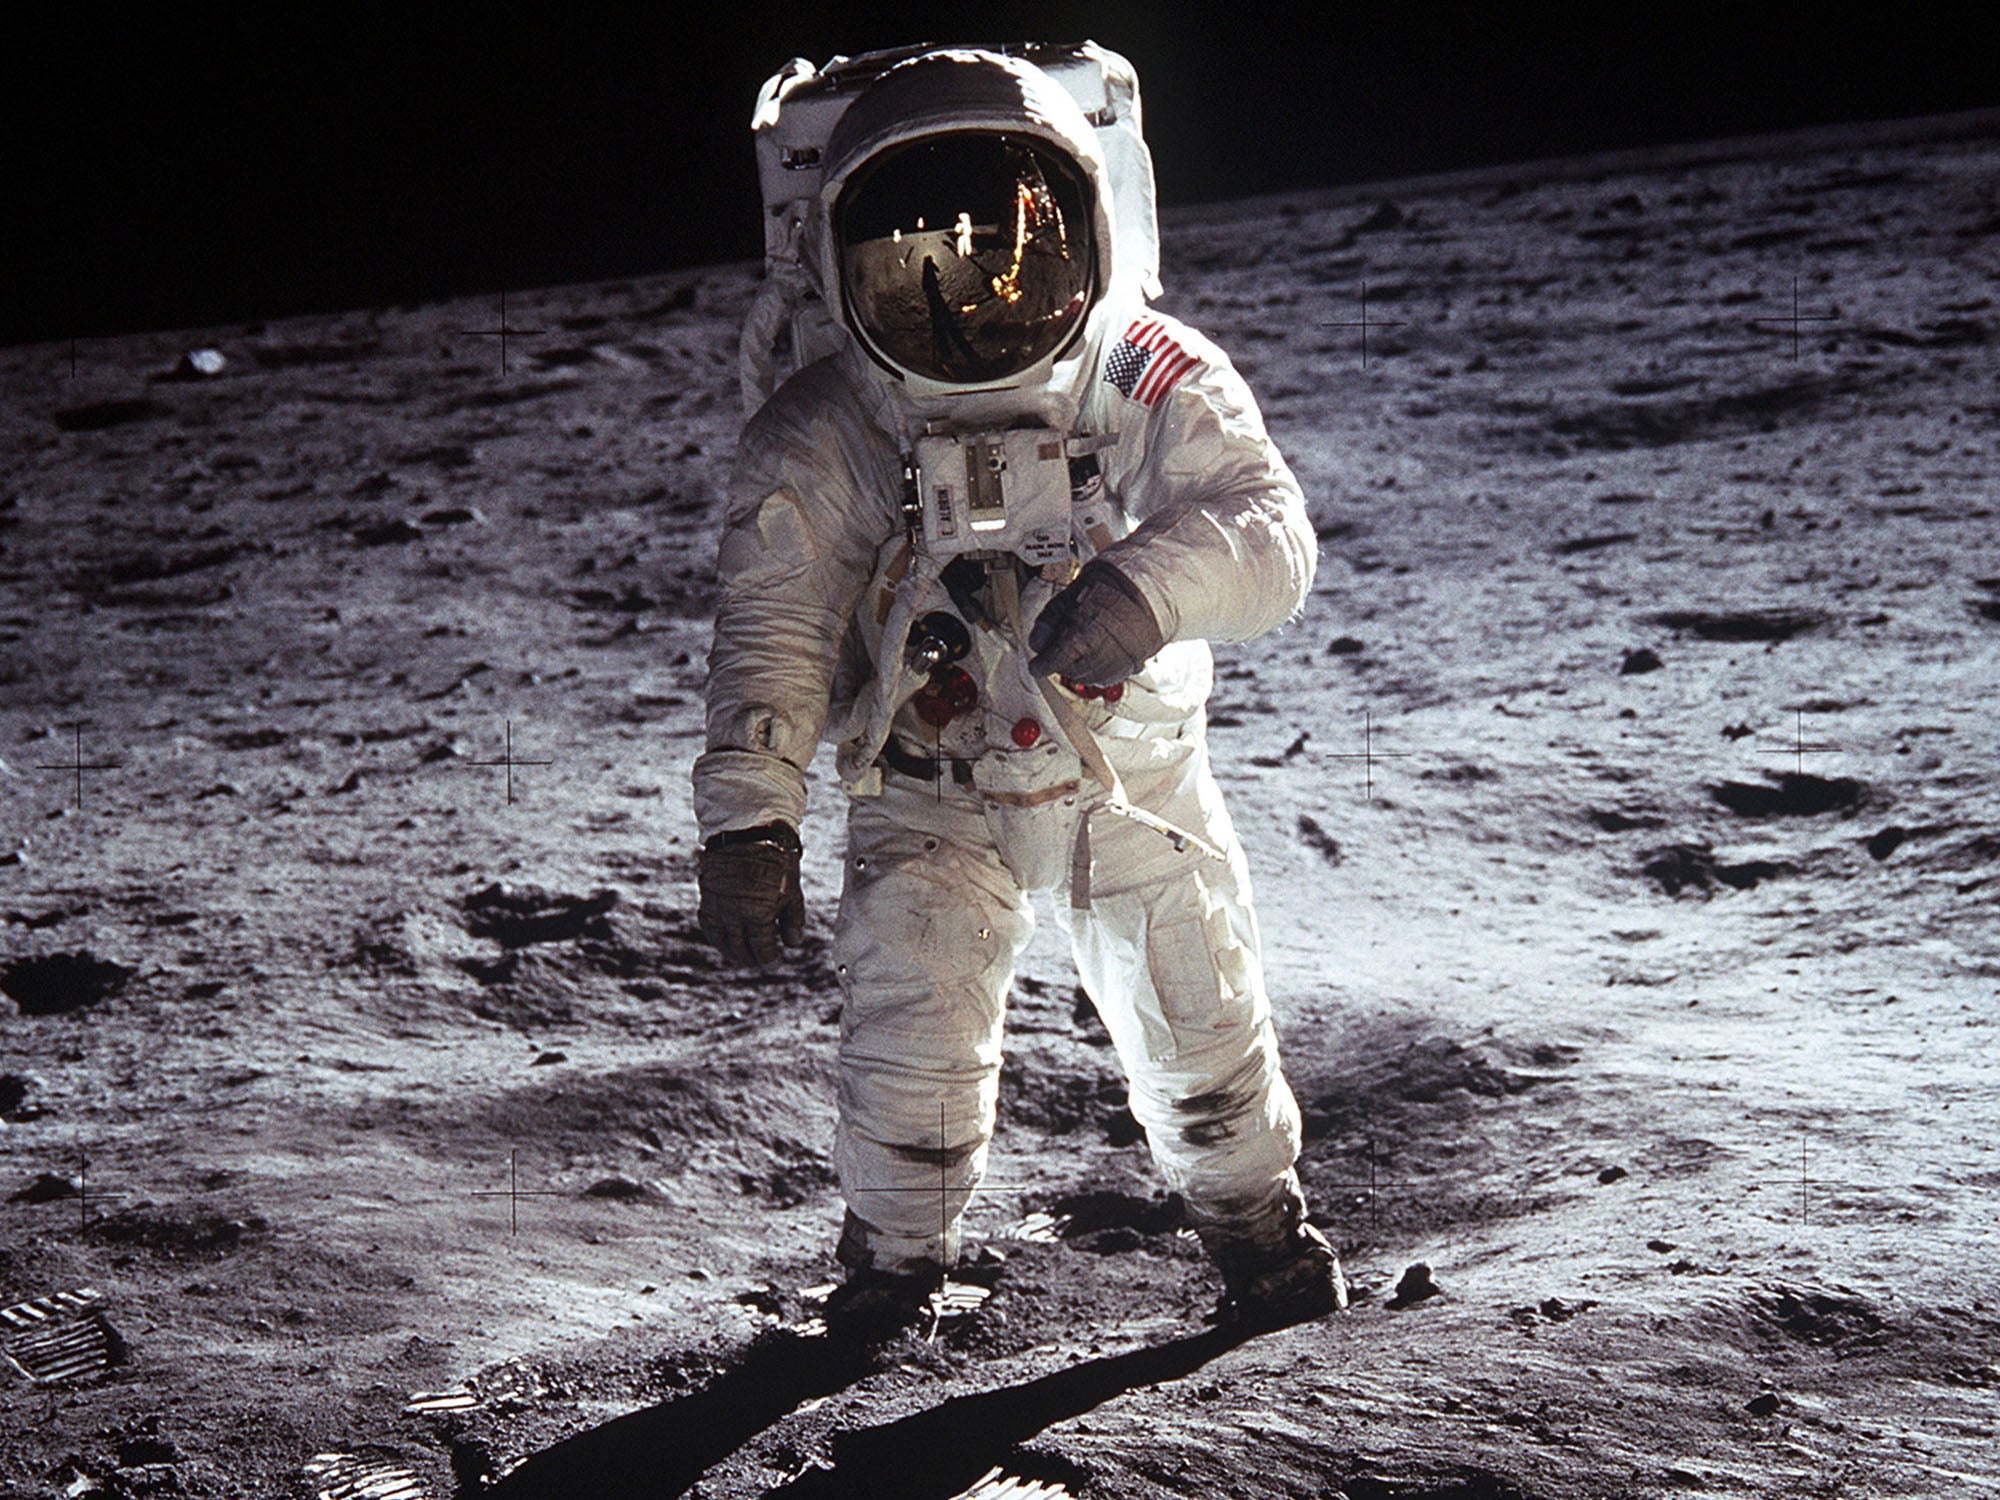 Buzz Aldrin wears Omega Speedmaster on the Moon